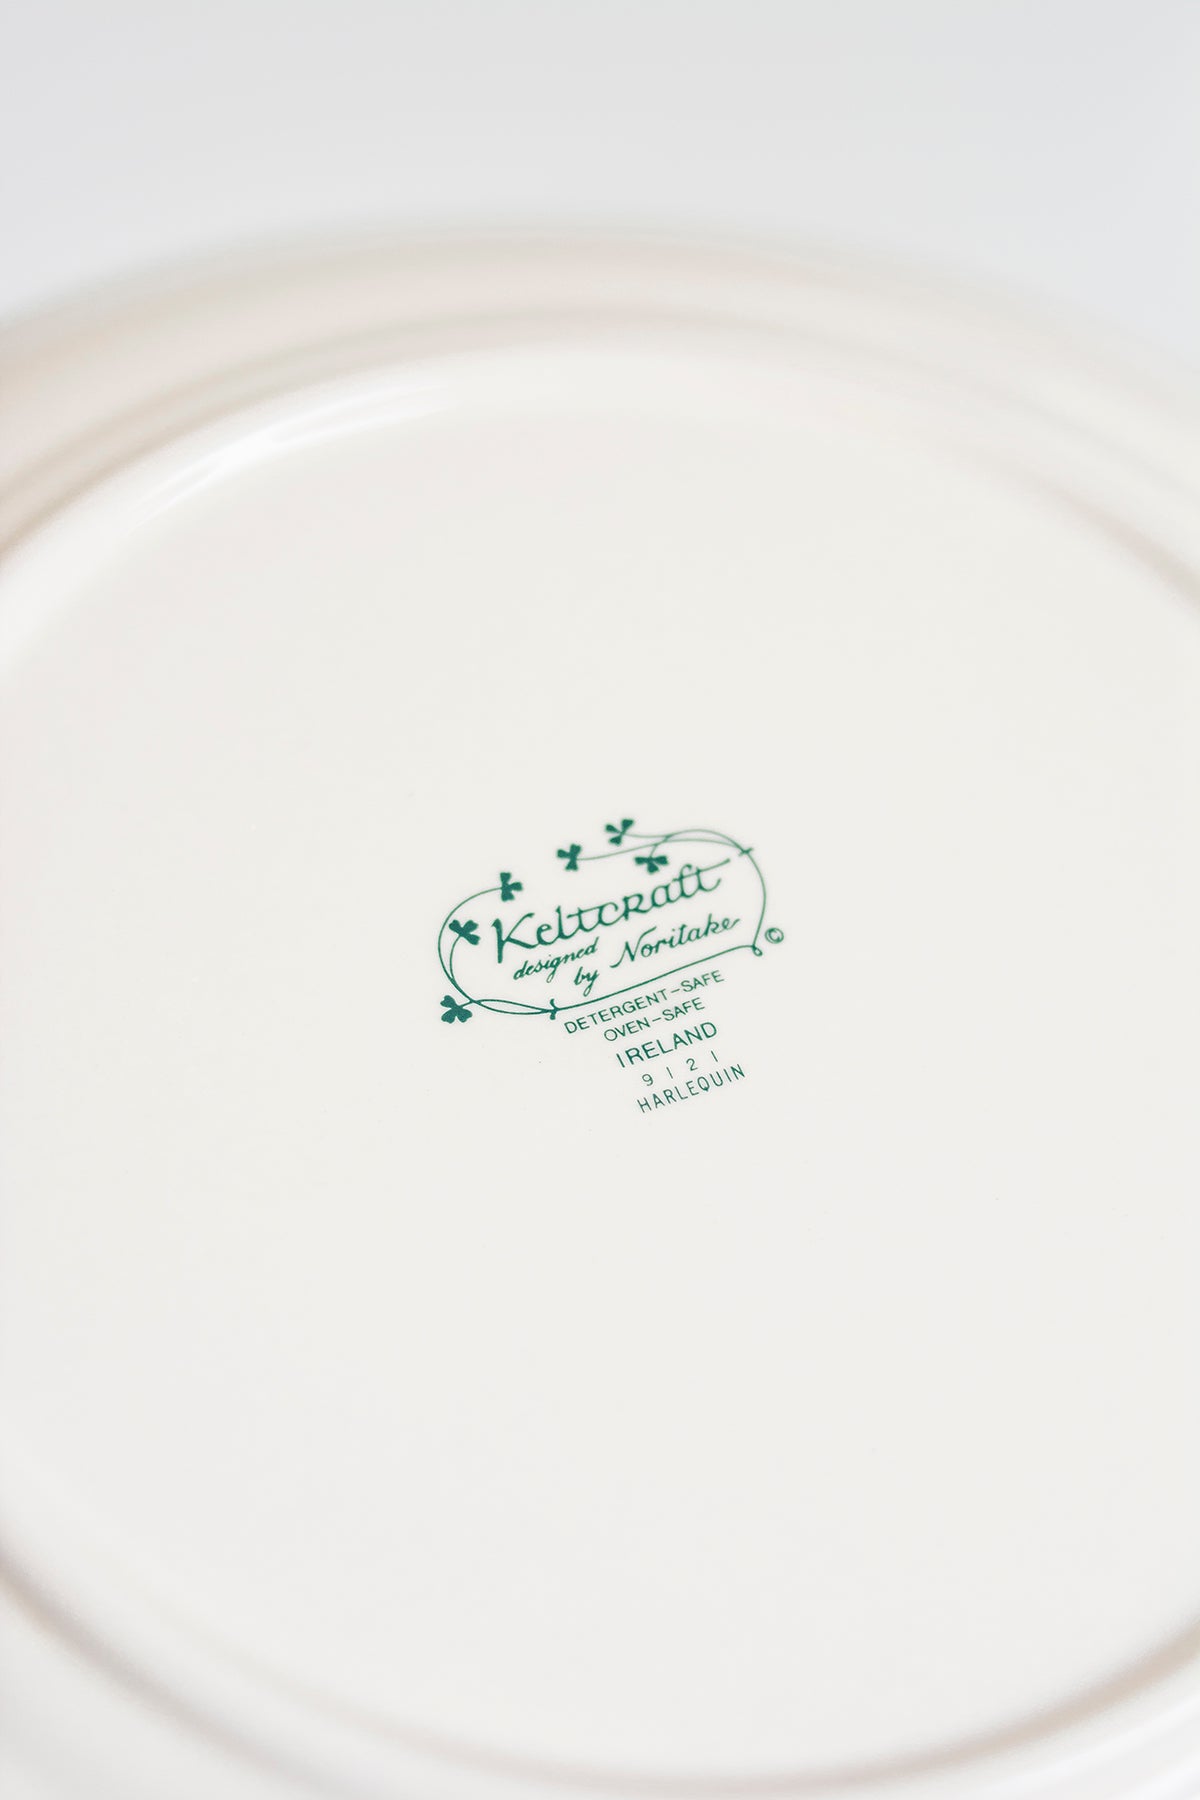 Noritake Keltcraft Salad Plate